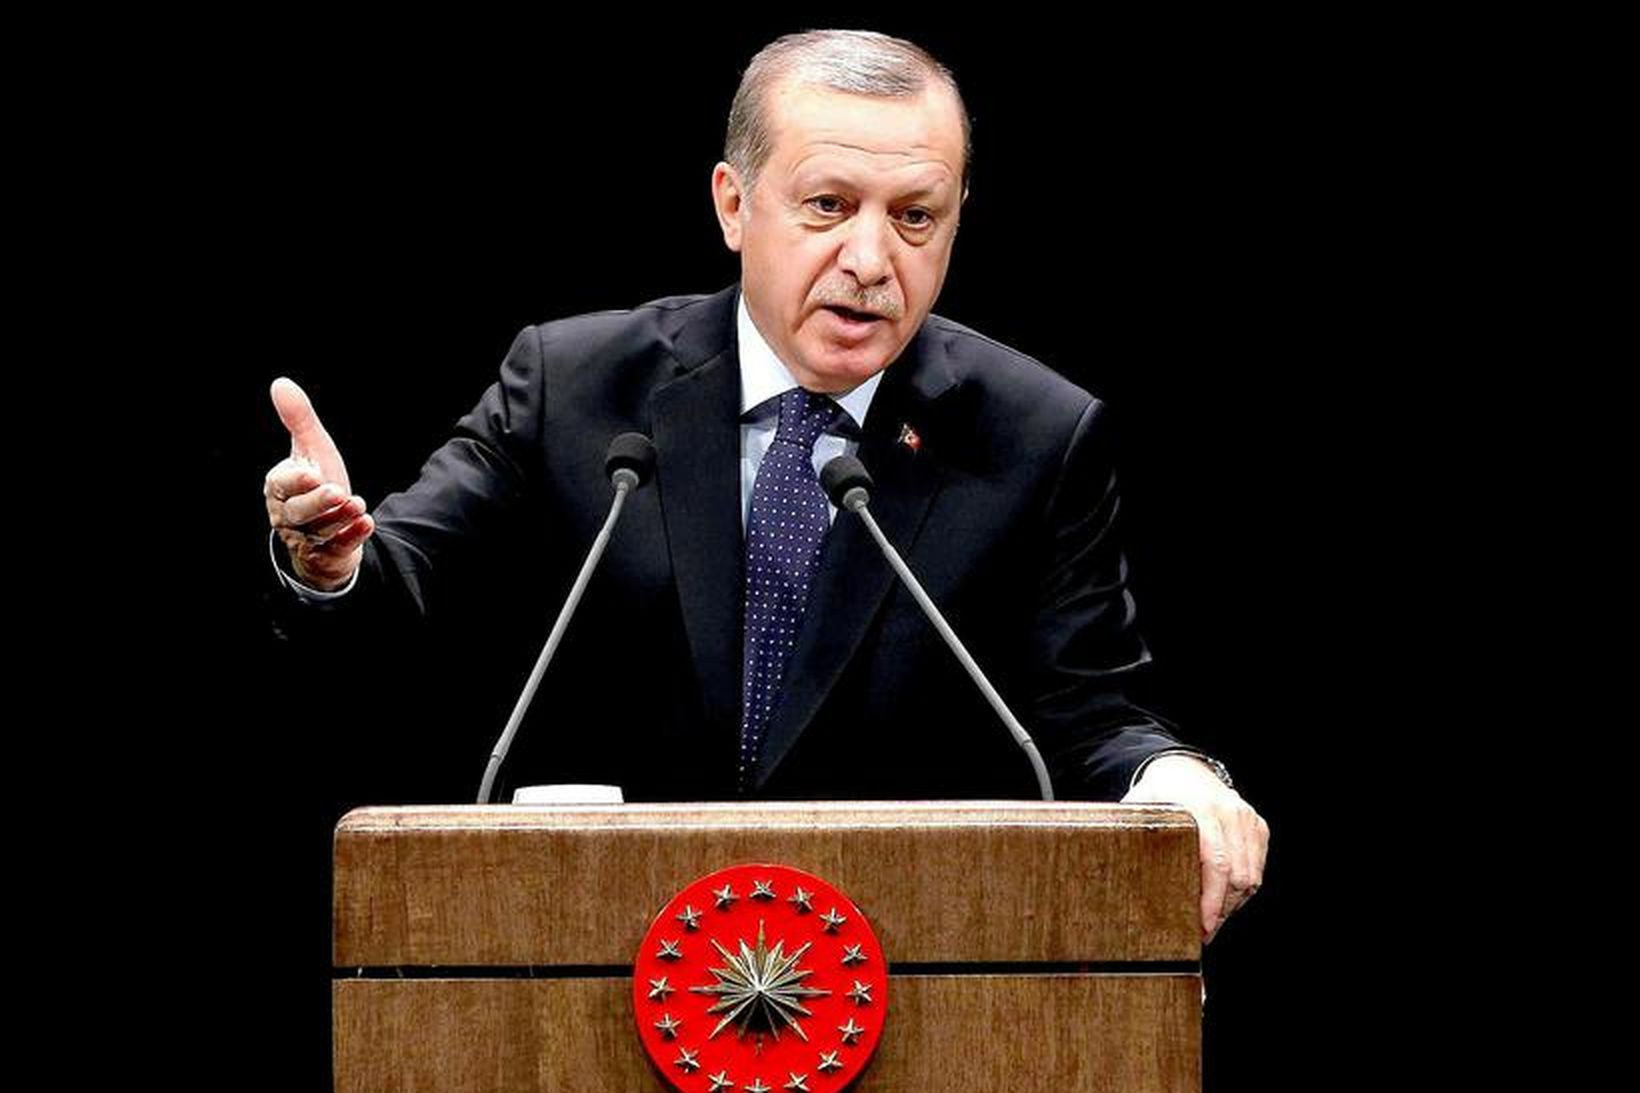 Erdogan, forseti Tyrklands.